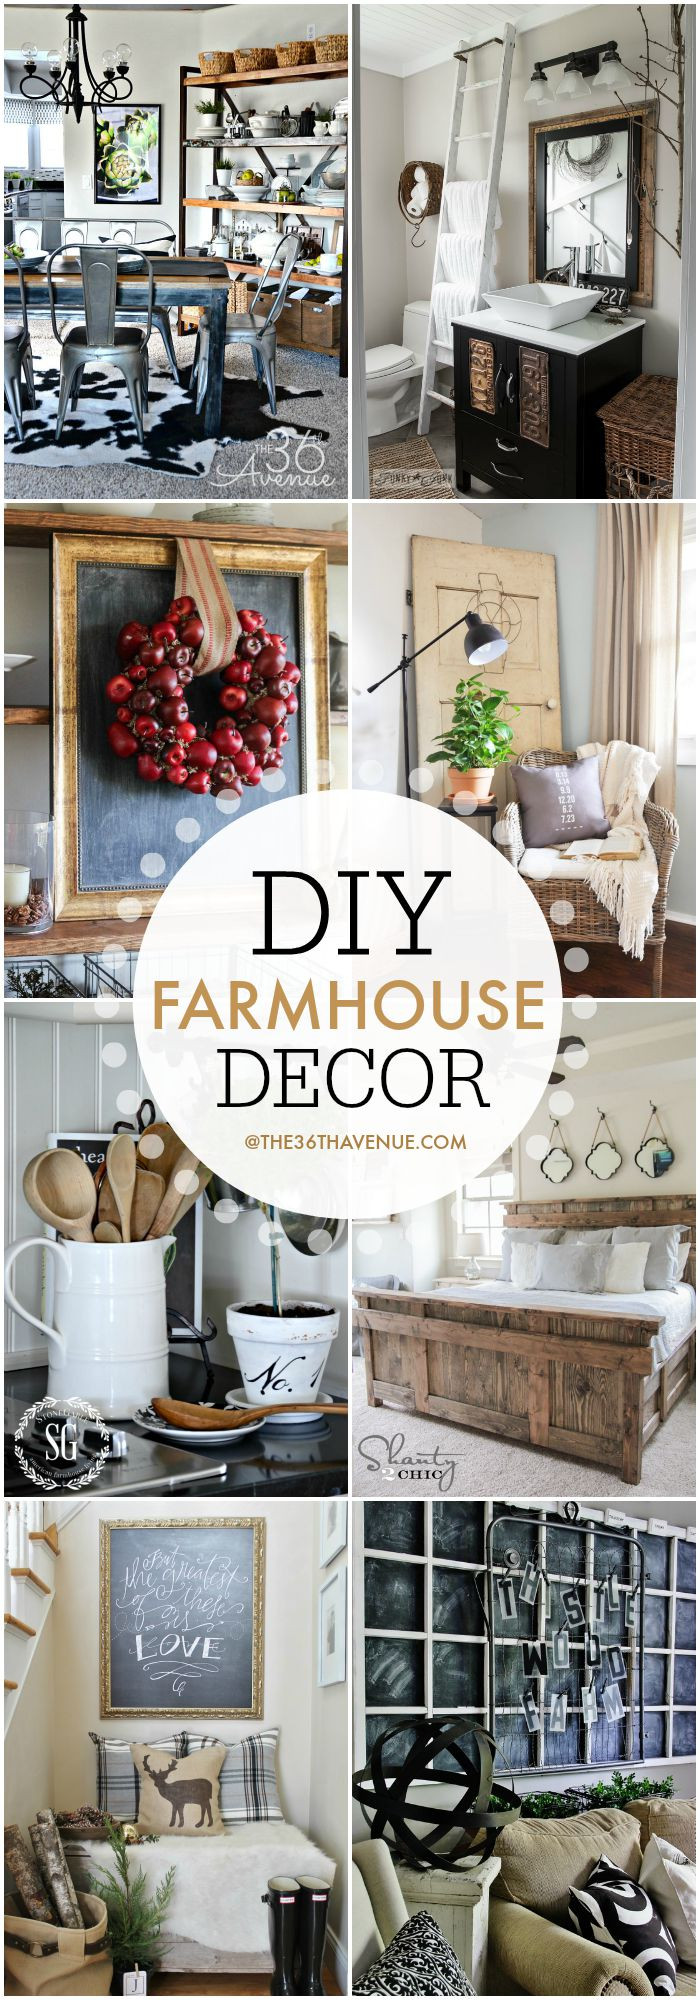 Best ideas about DIY Home Decor Ideas
. Save or Pin Farmhouse Home Decor Ideas The 36th AVENUE Now.